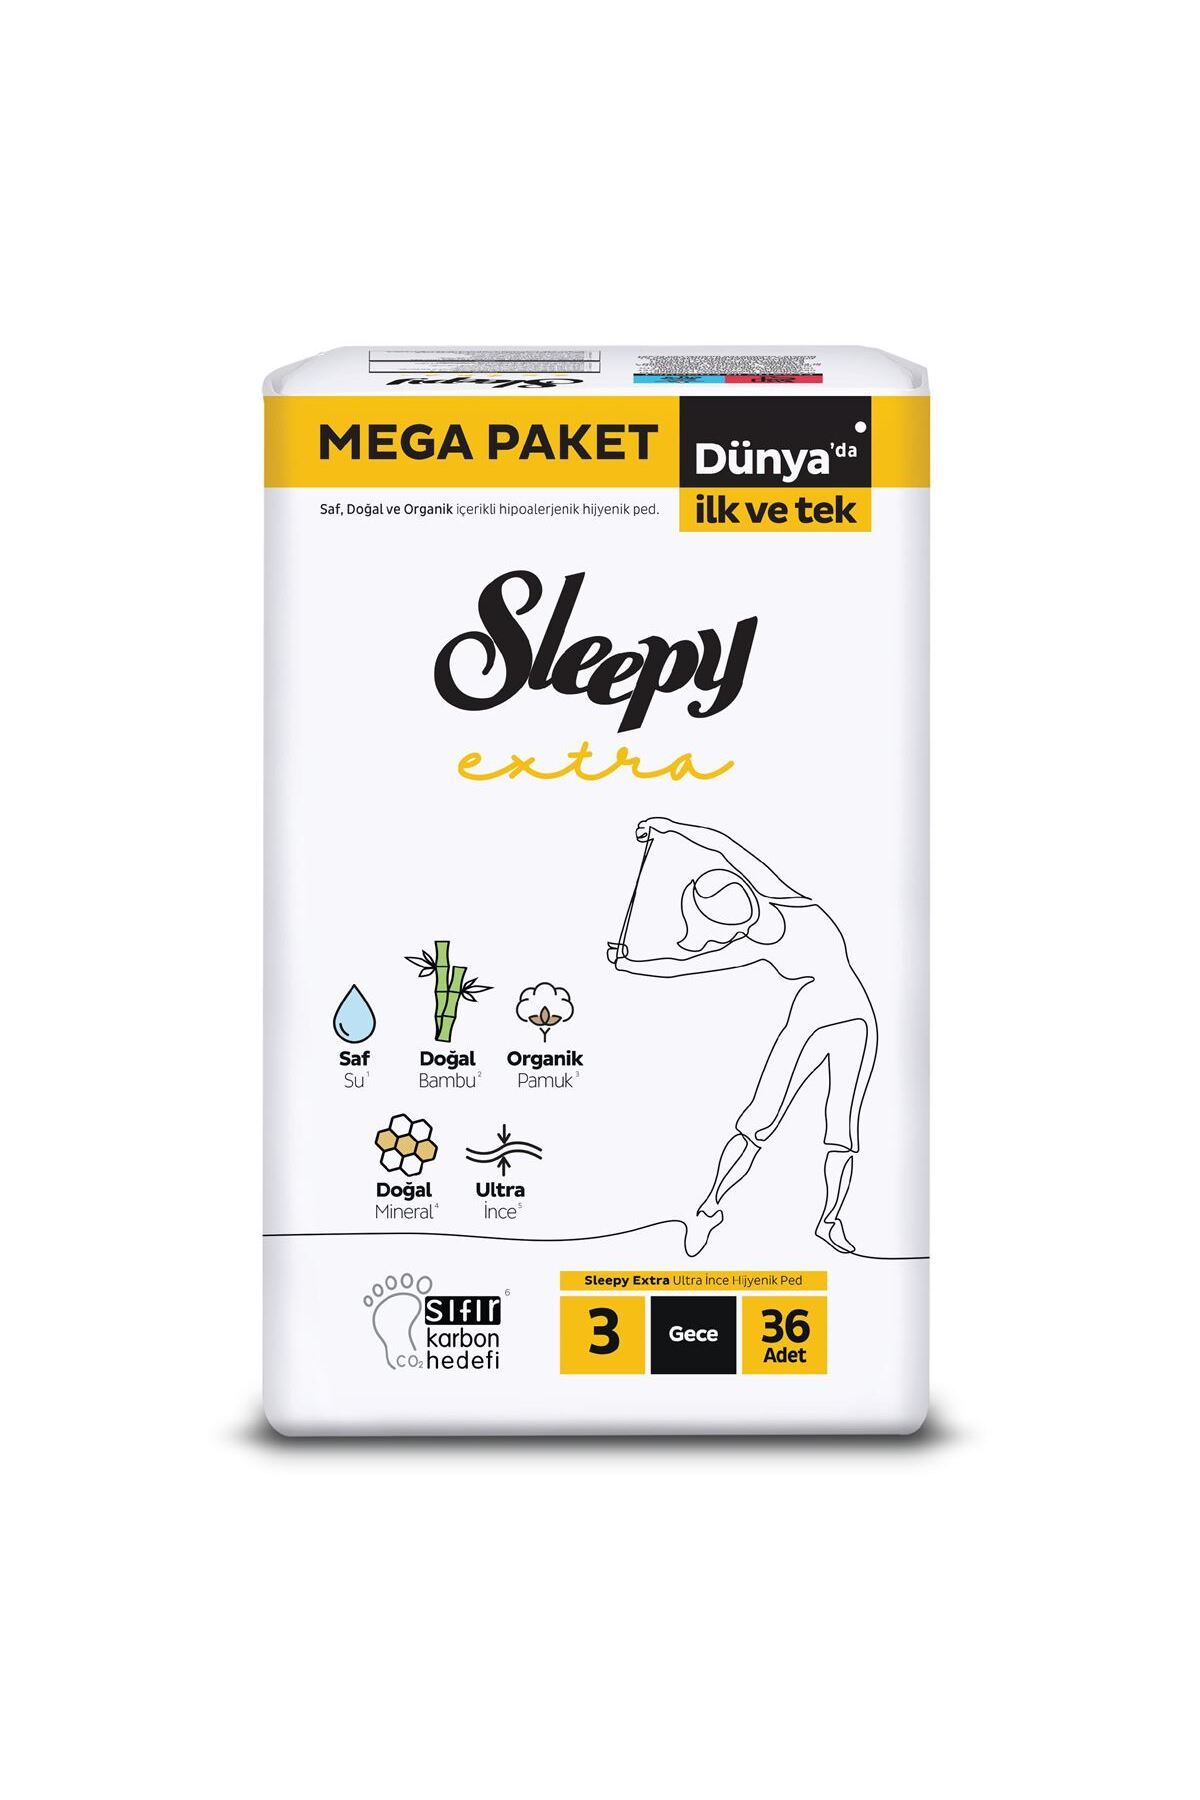 Sleepy Extra Ultra İnce Hijyenik Ped Gece (36 Ped) Mega Paket